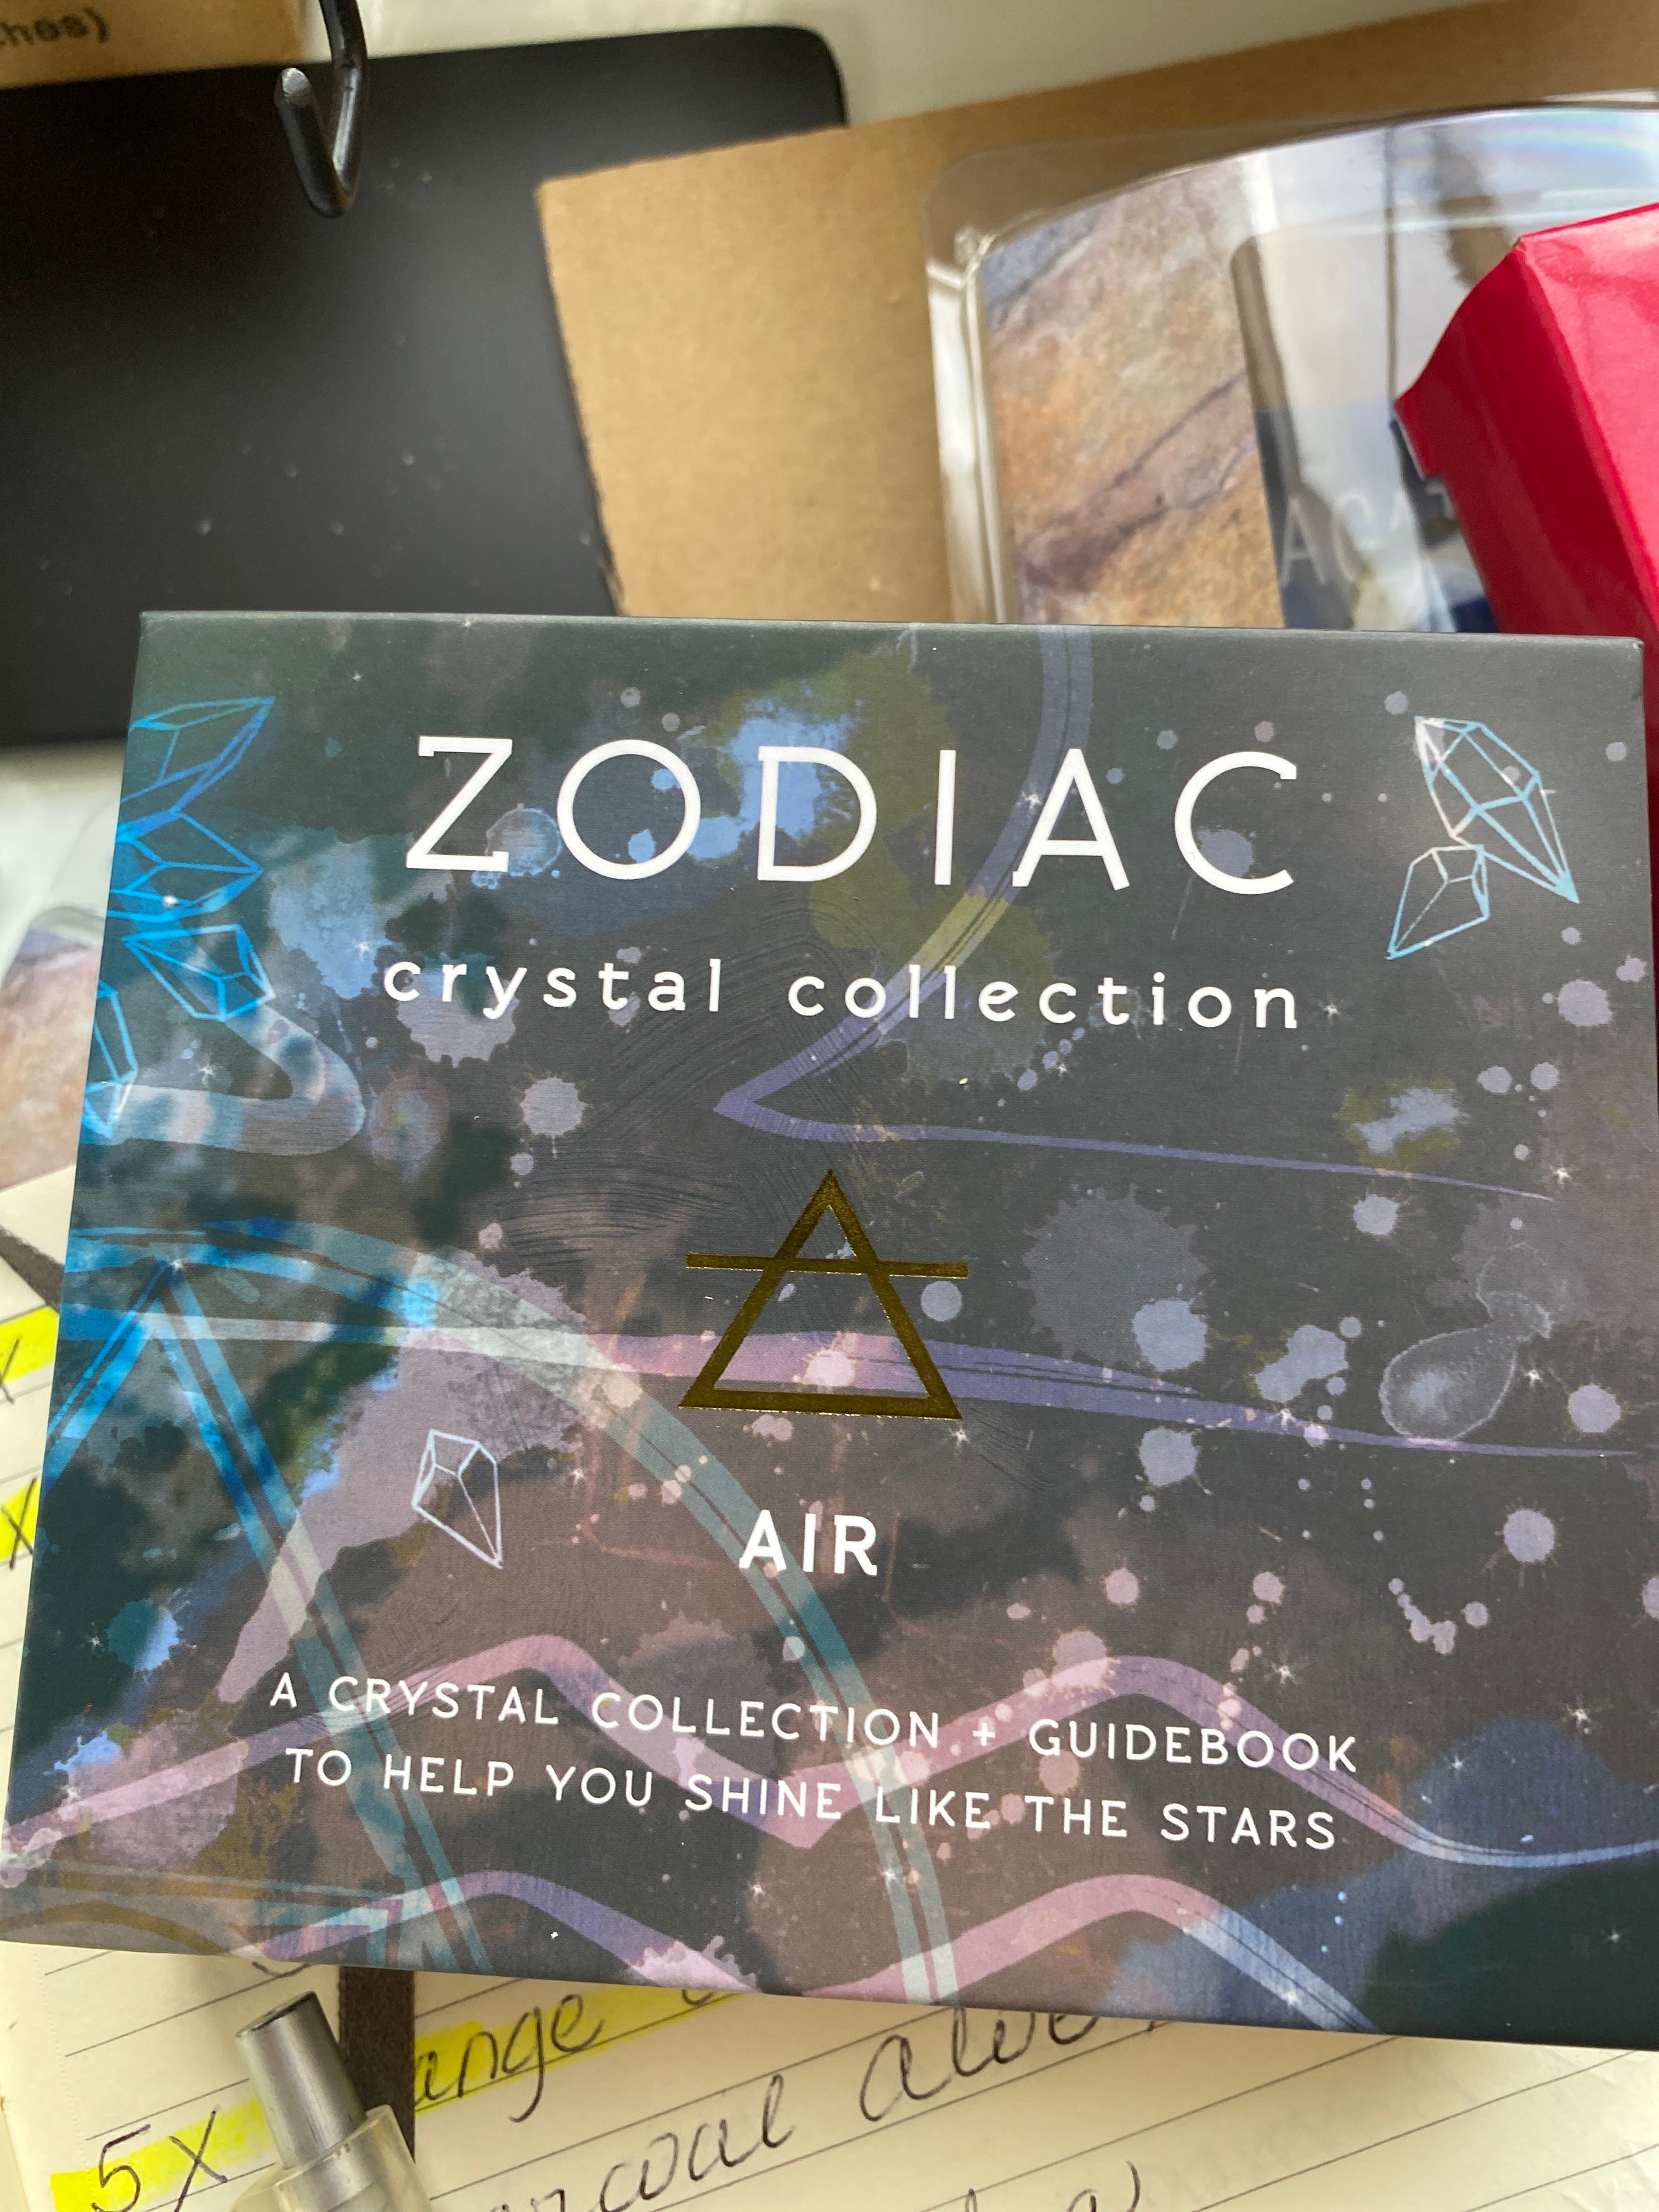 Zodiac crystal collection AIR